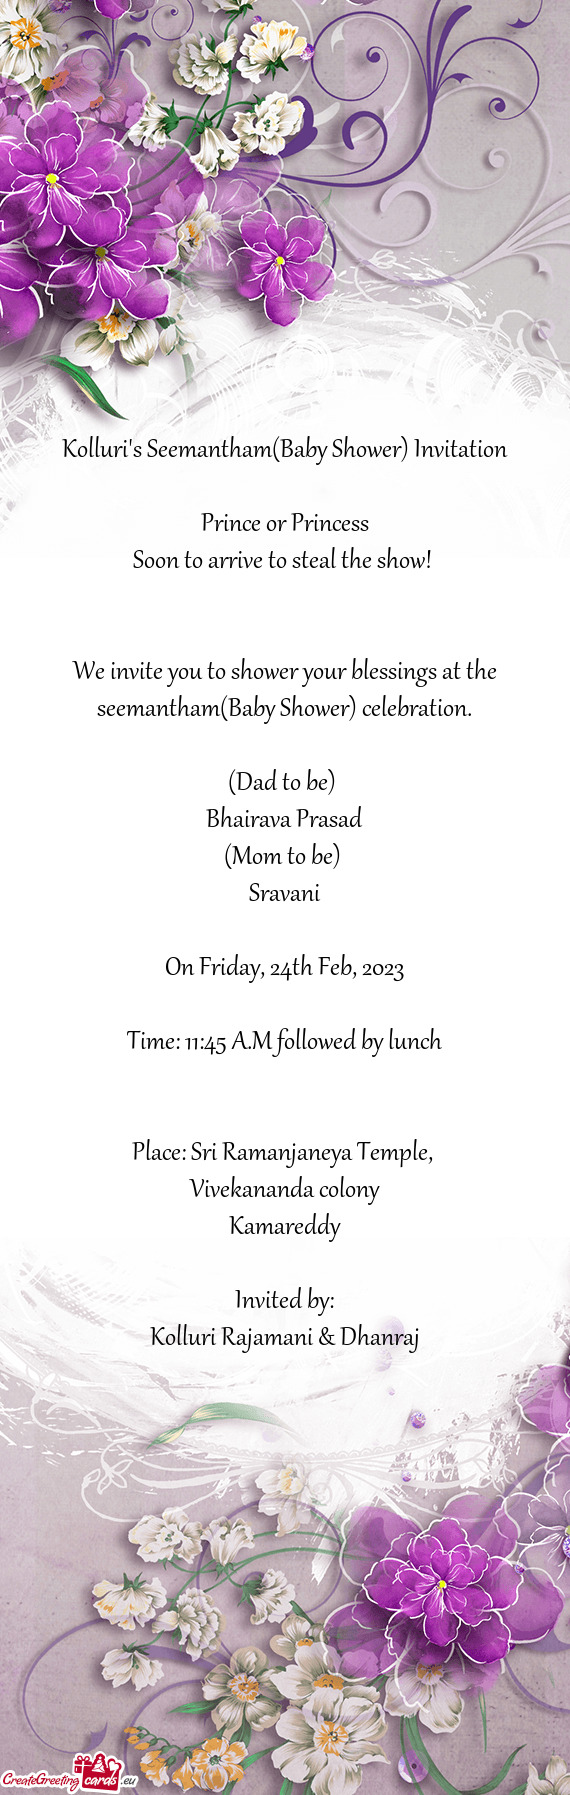 Kolluri's Seemantham(Baby Shower) Invitation